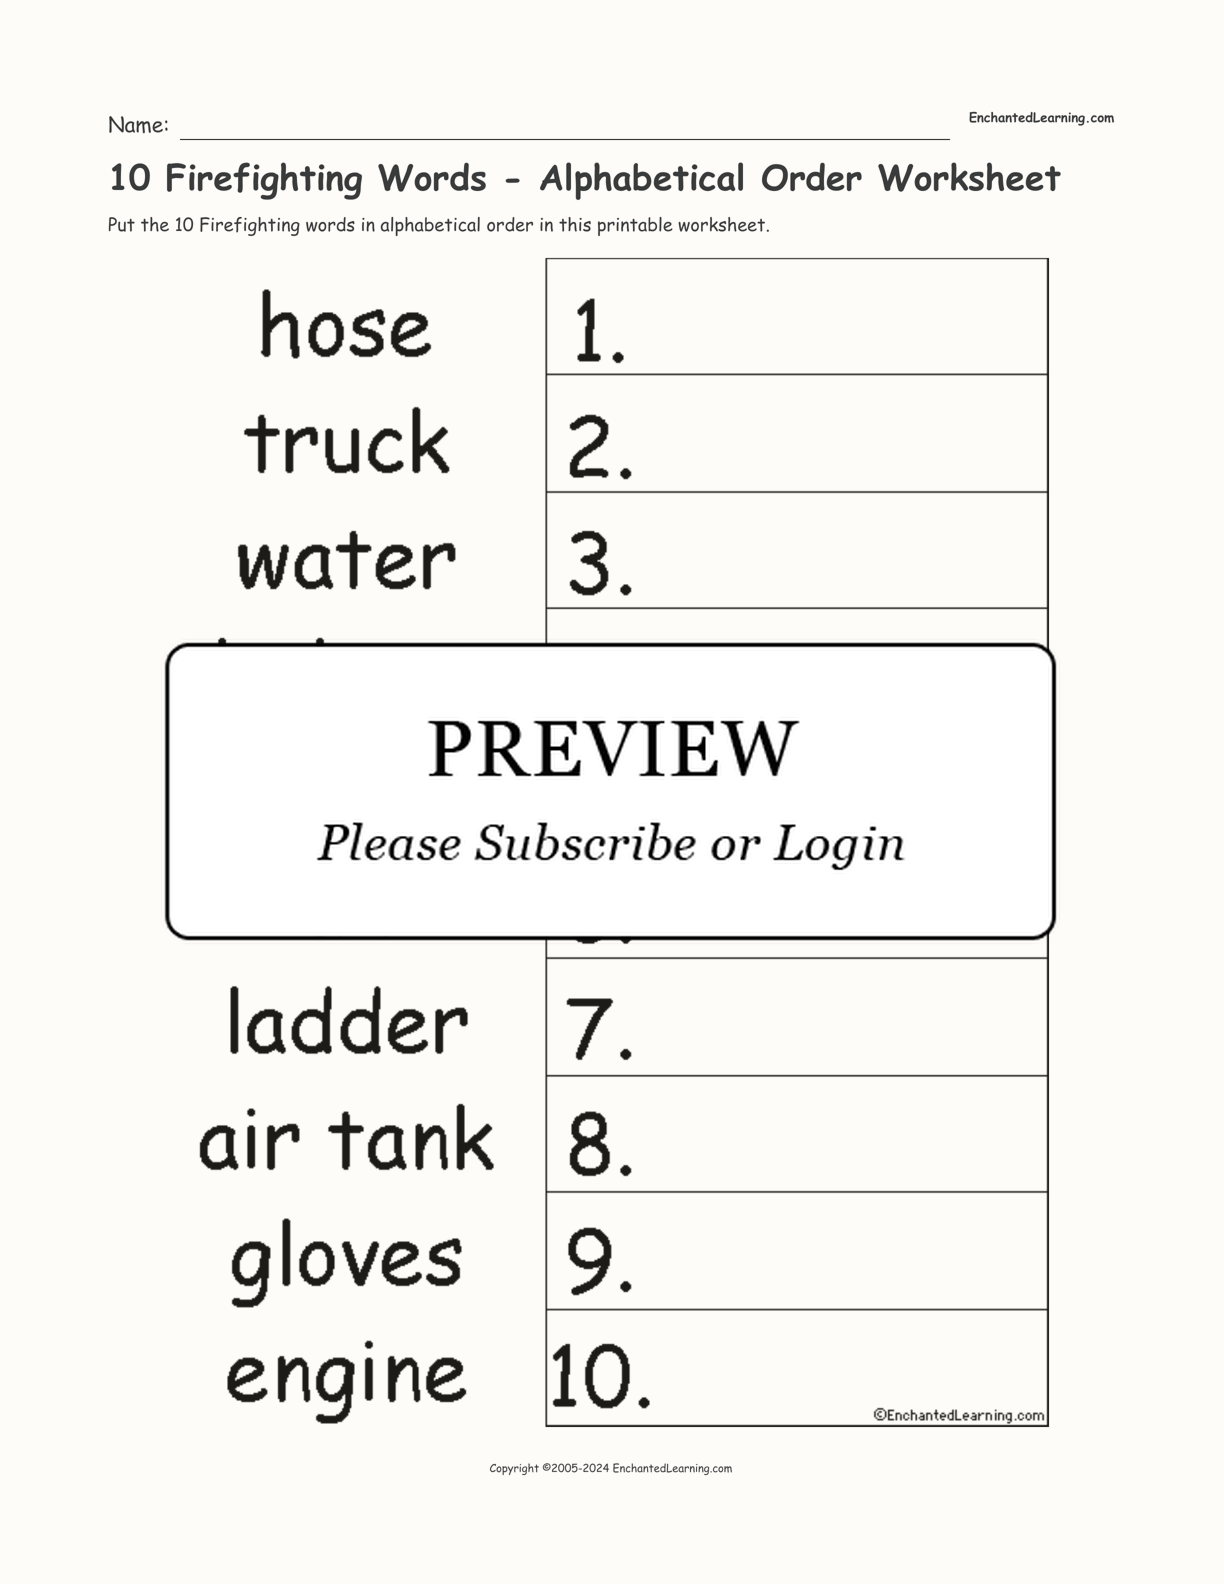 10 Firefighting Words - Alphabetical Order Worksheet interactive worksheet page 1